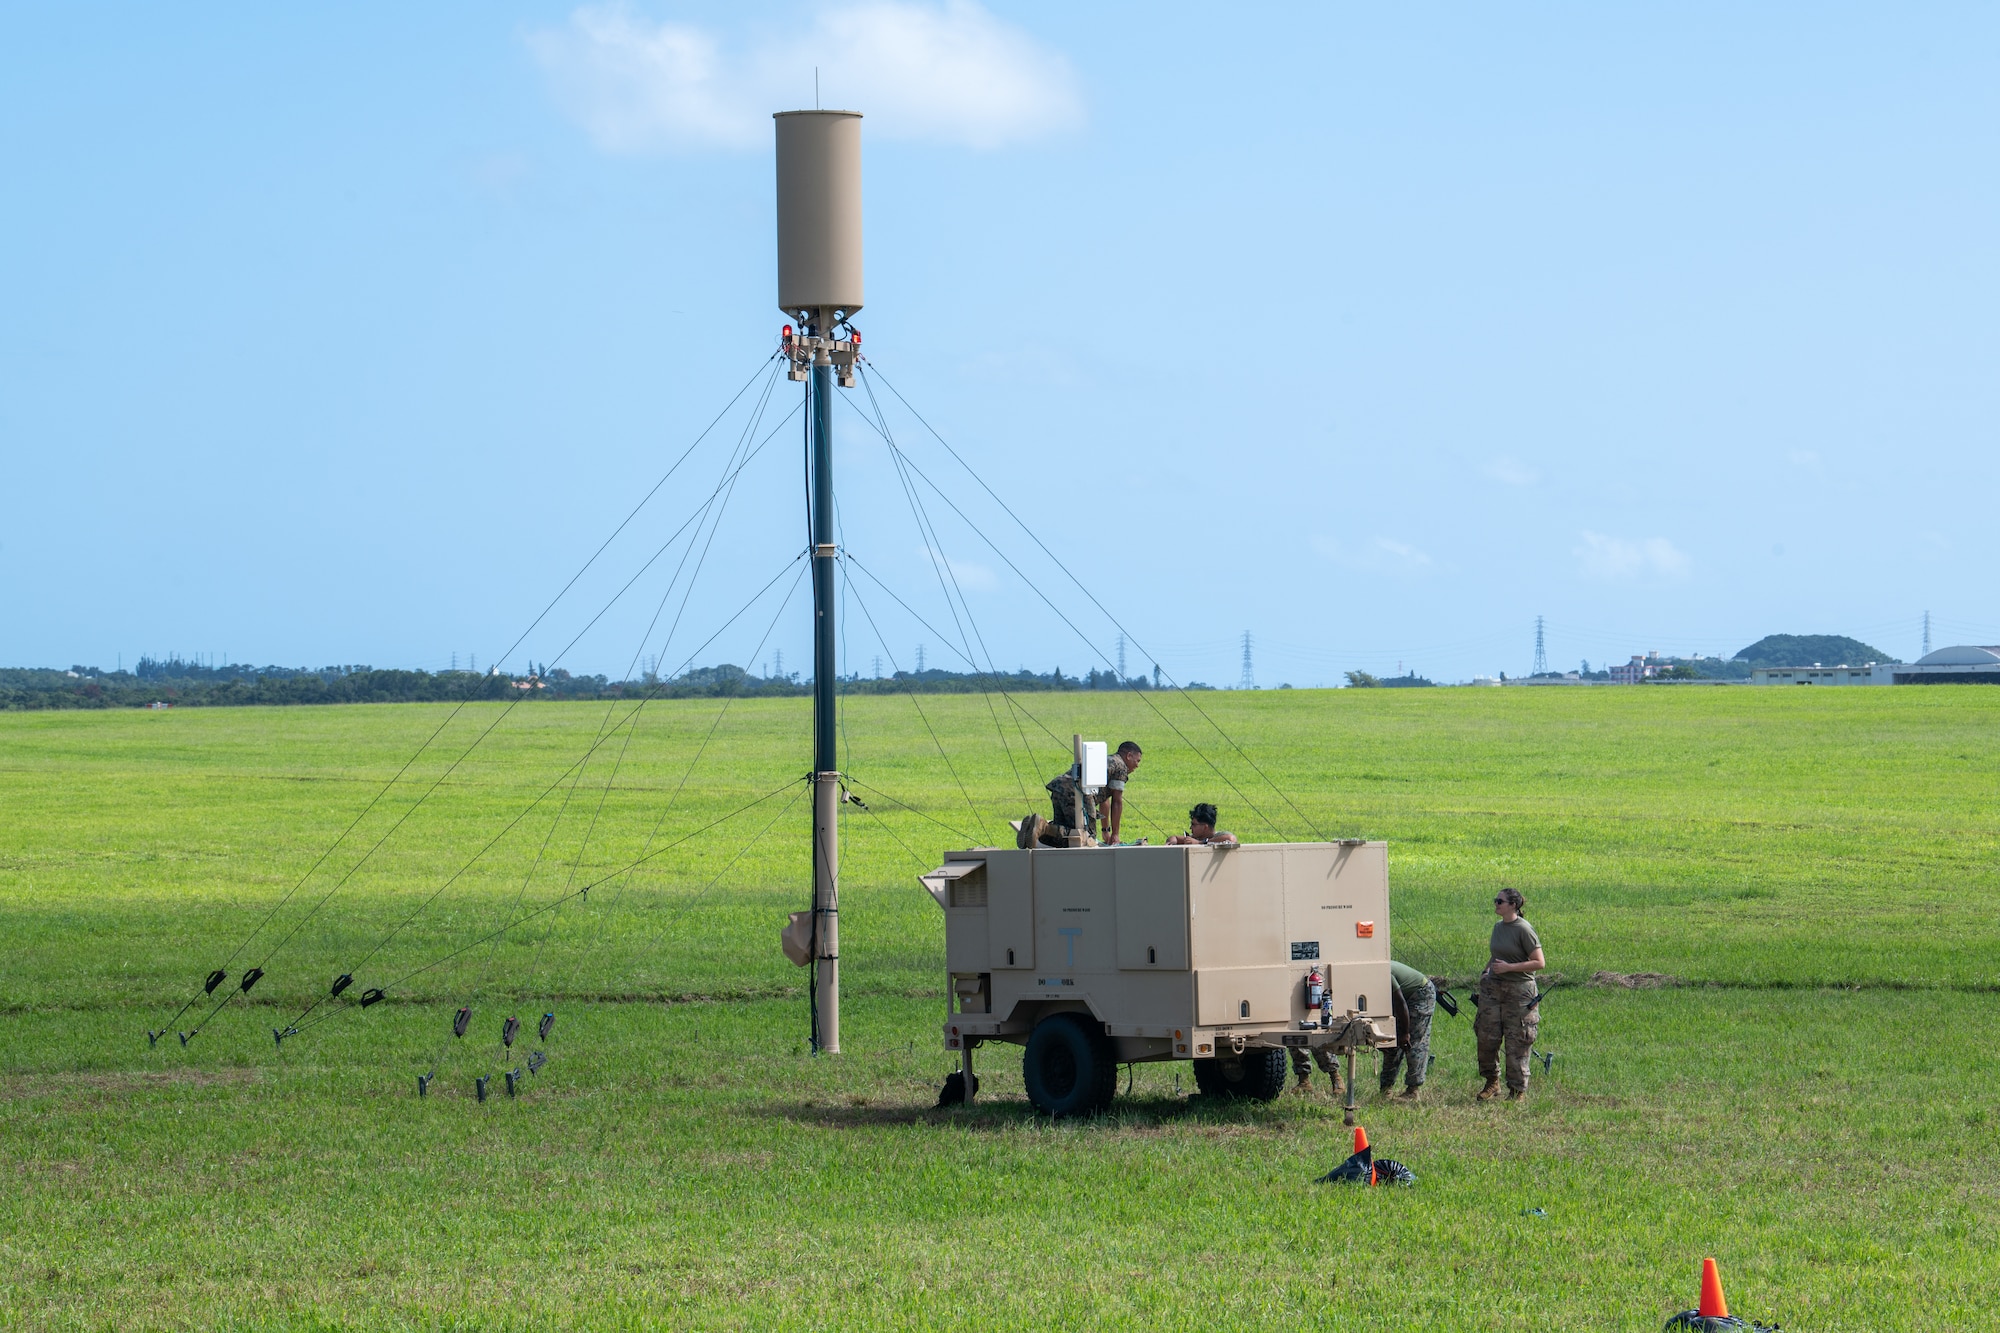 Some marines stand around a machine on wheels next to a radar tower.